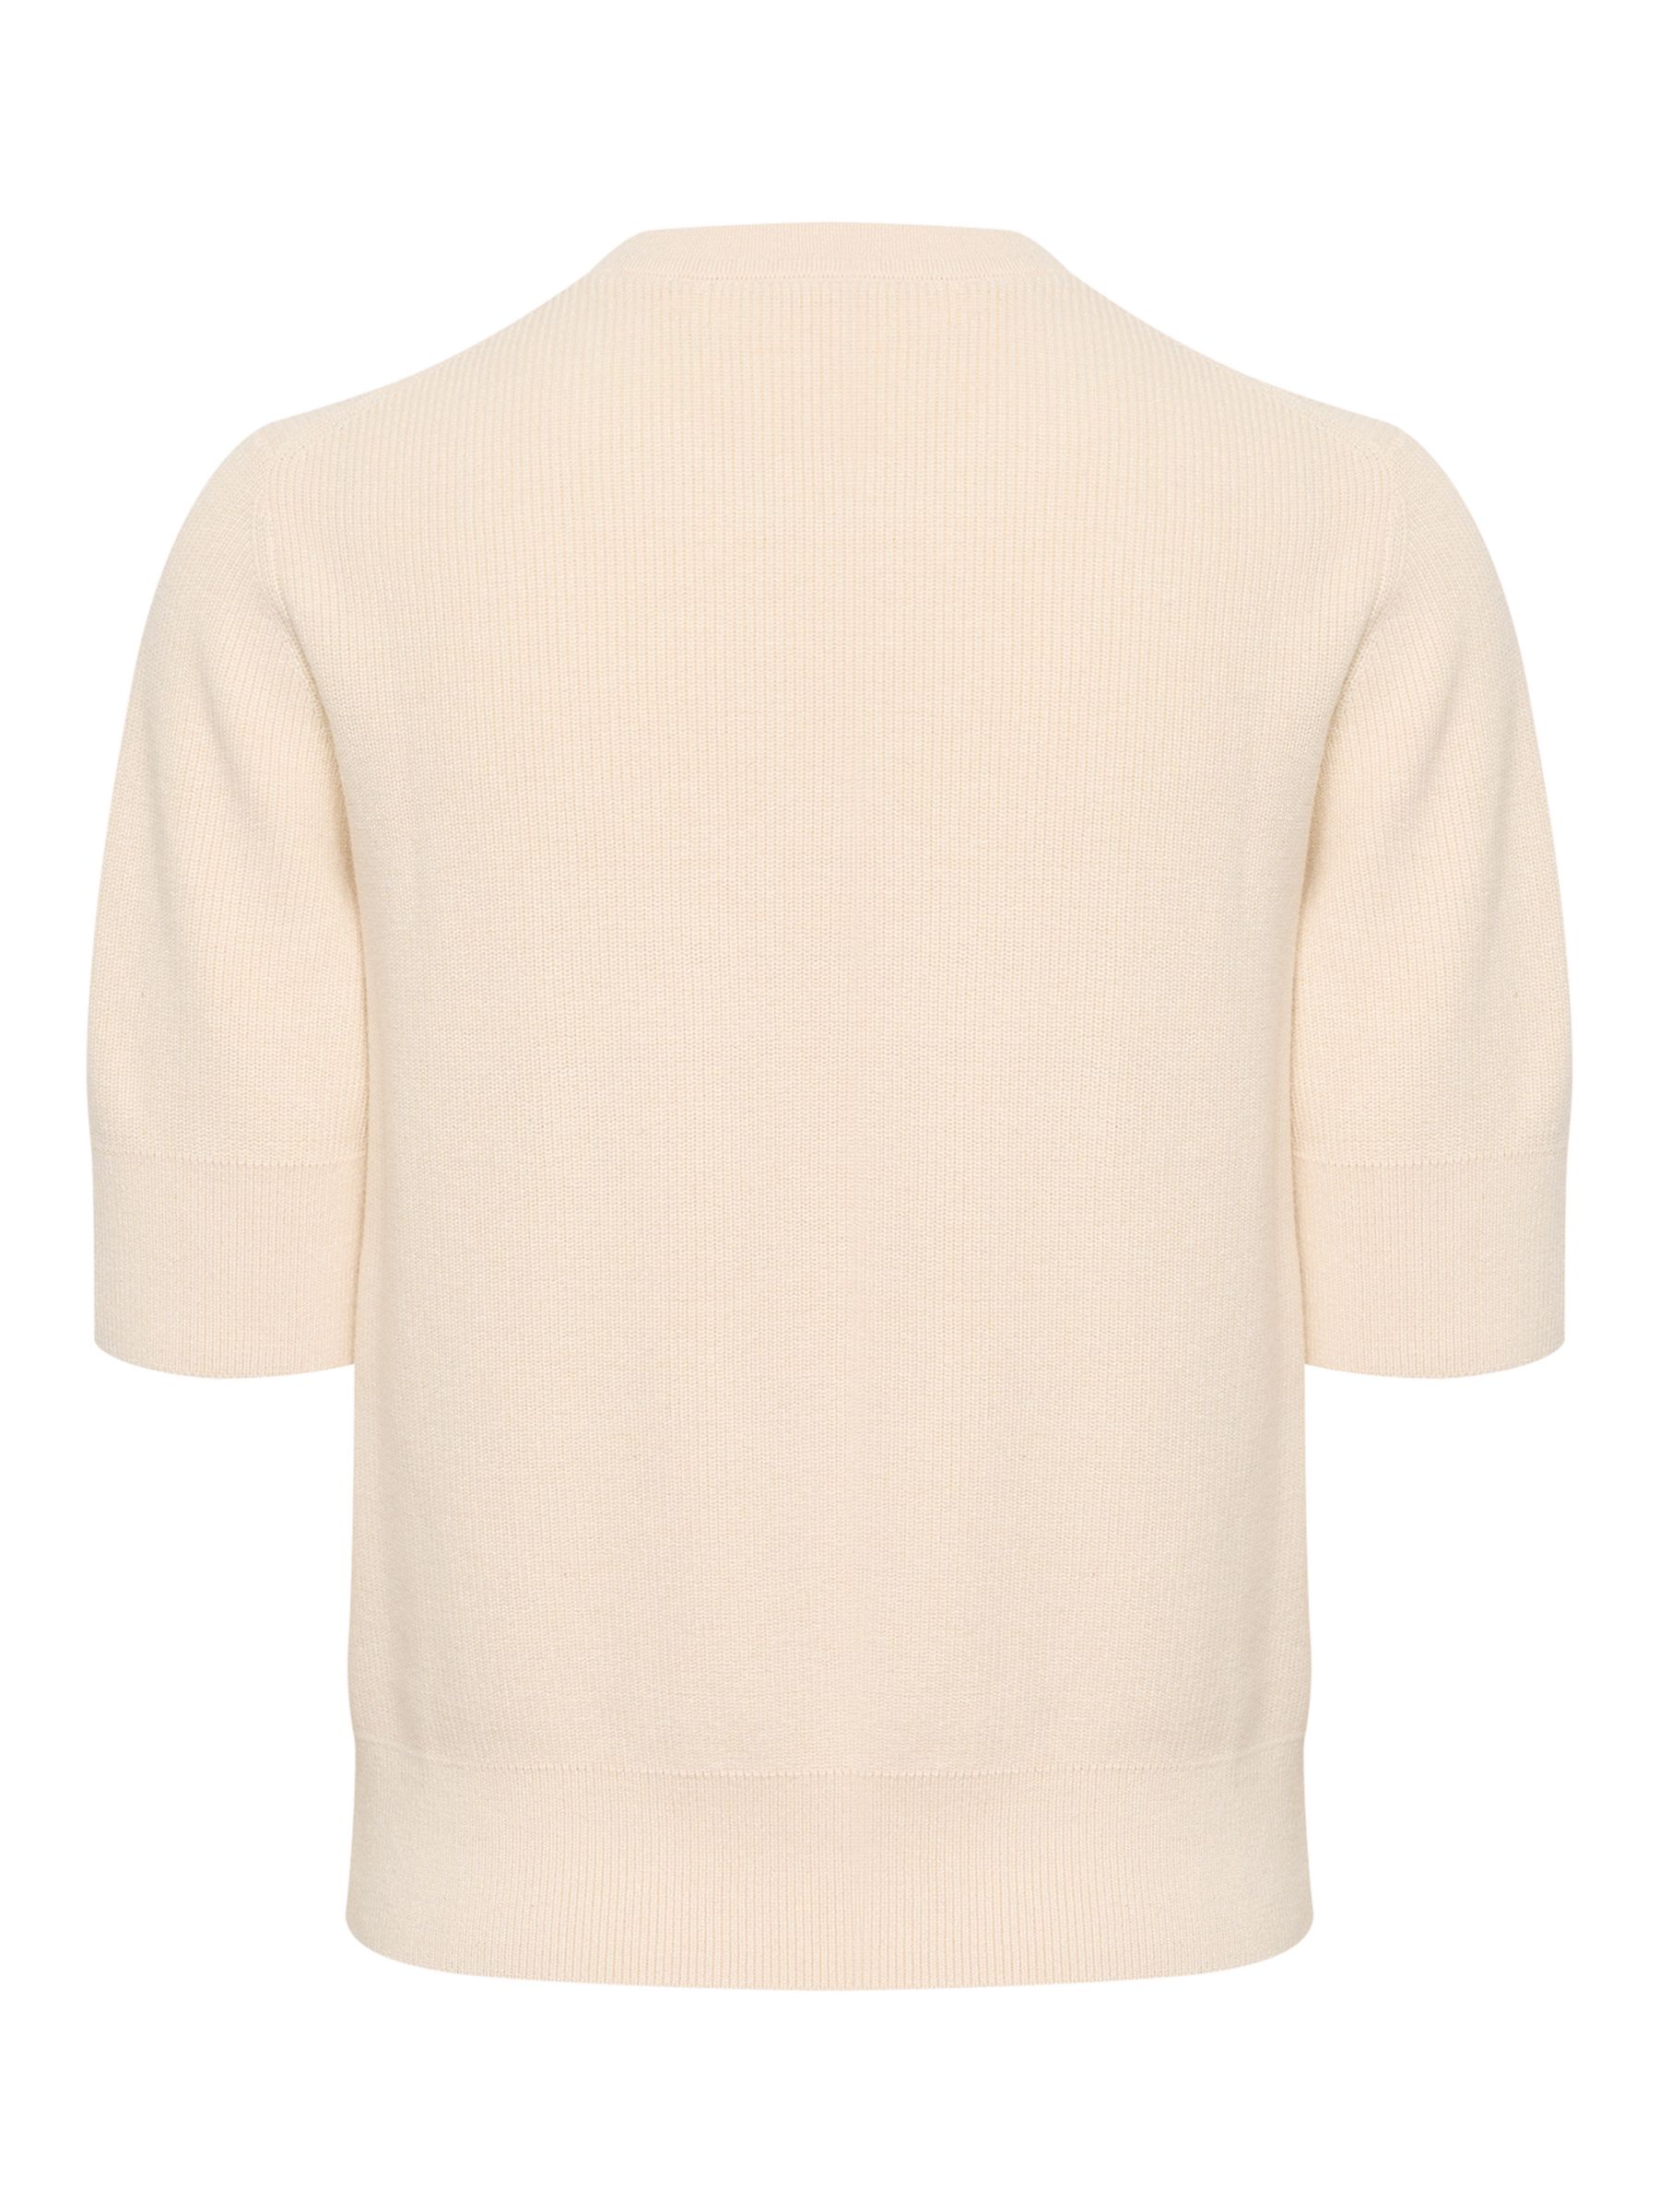 InWear Melas Short Sleeve Classic Fit T-shirt, Vanilla, M